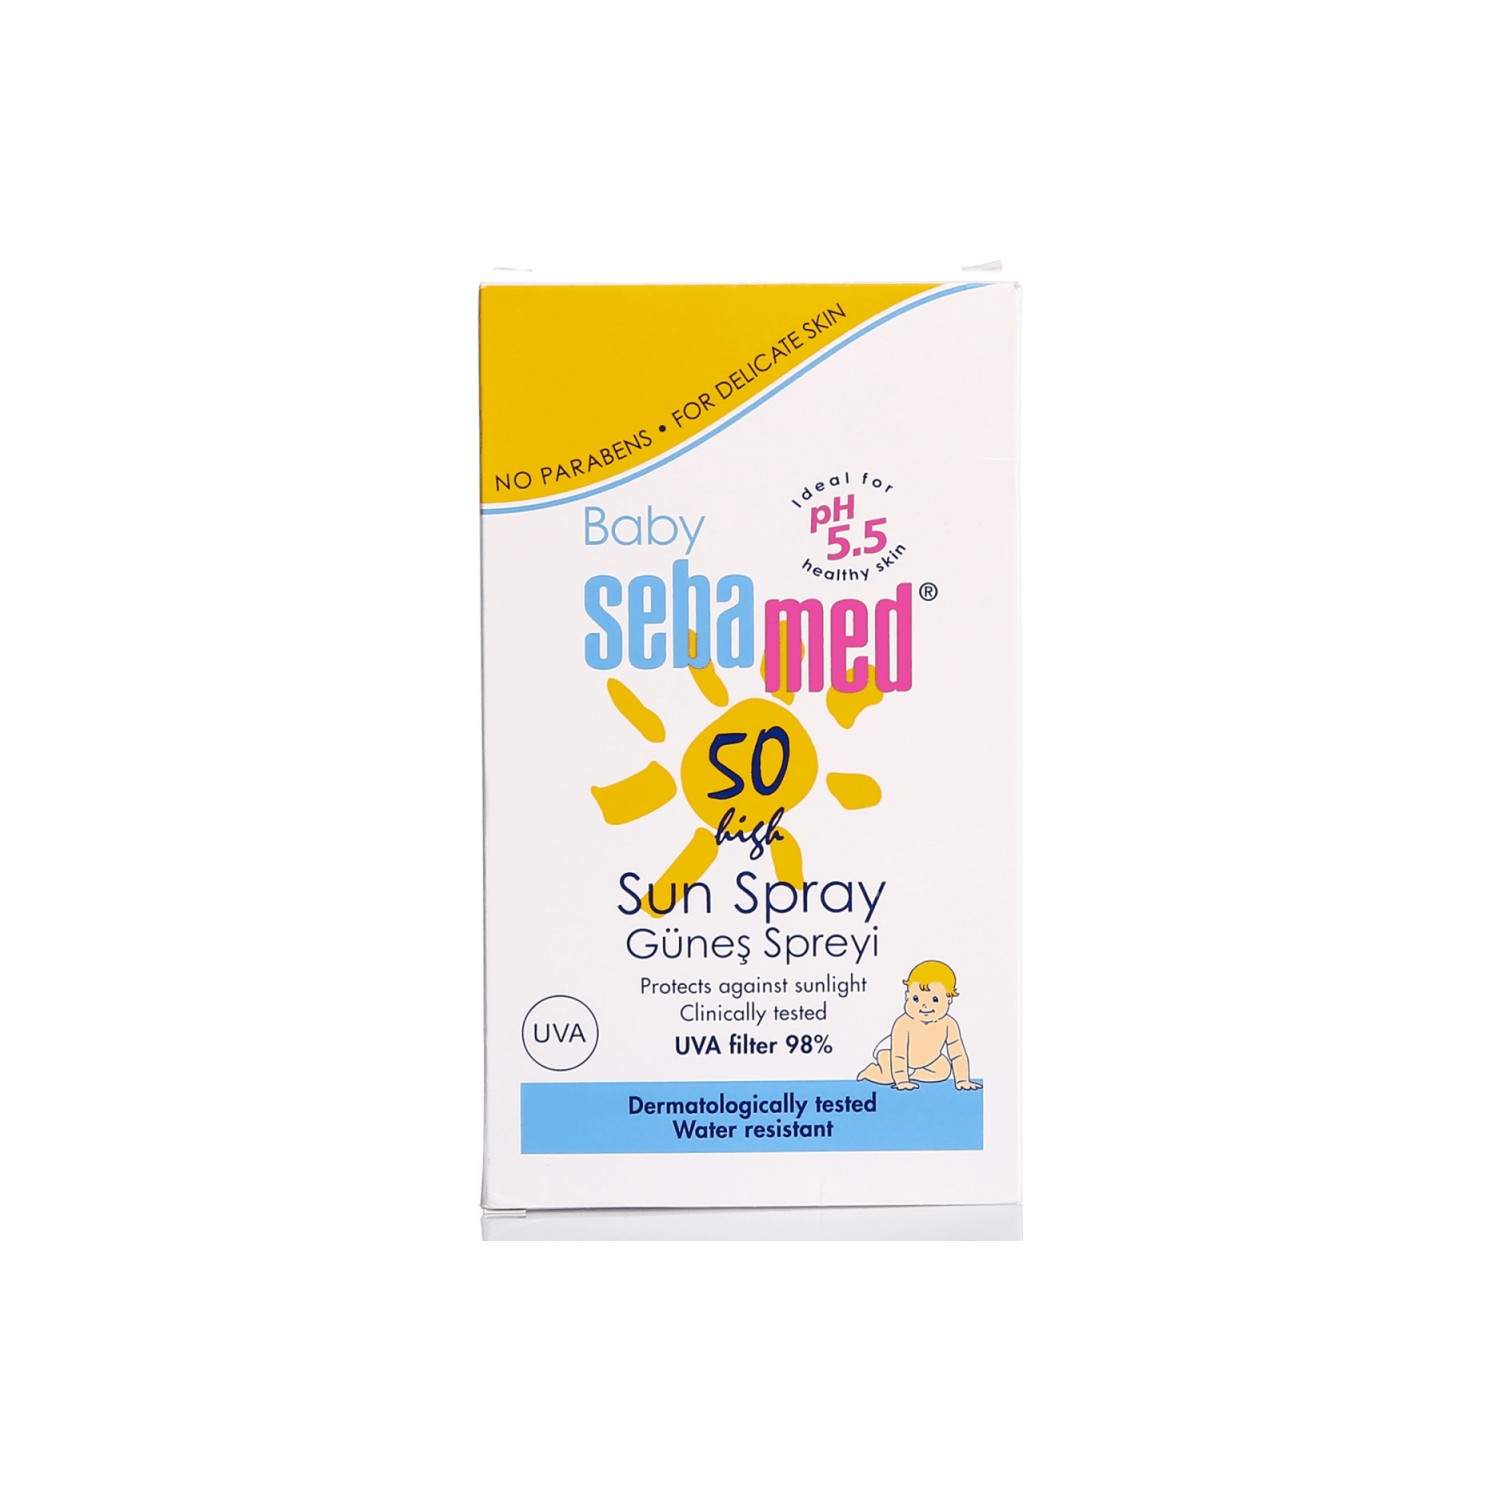 Детский солнцезащитный спрей Sebamed Baby SPF 50, 200 мл avene sun spray spf 50 children 6 8 oz 200 ml